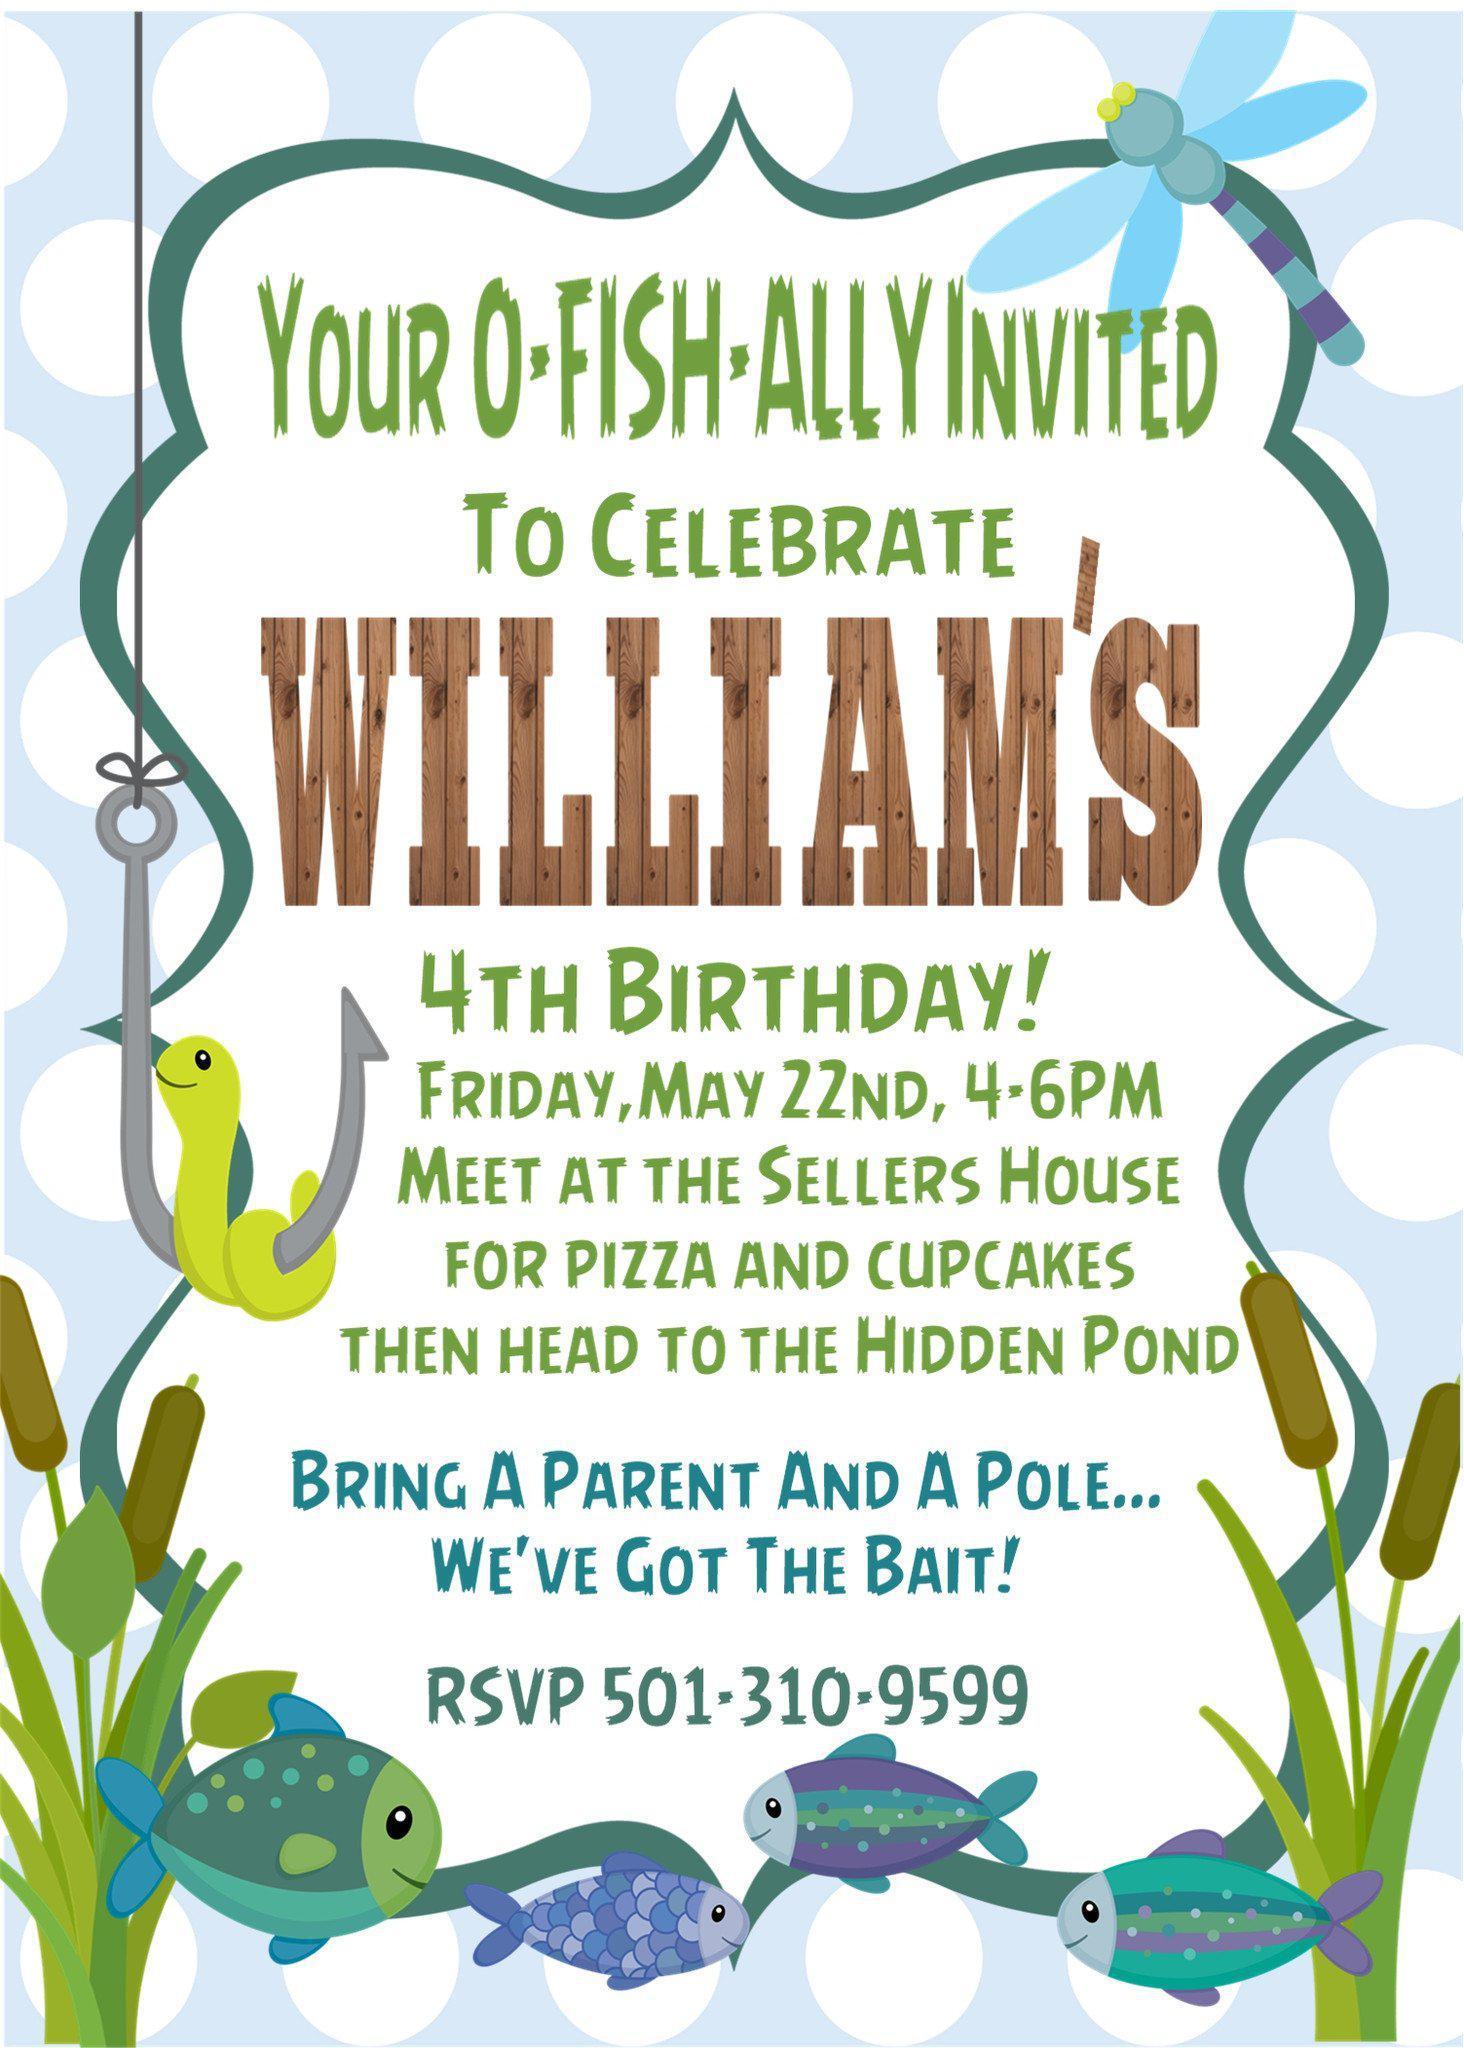 Fishing Birthday Party Invitations — Party Beautifully